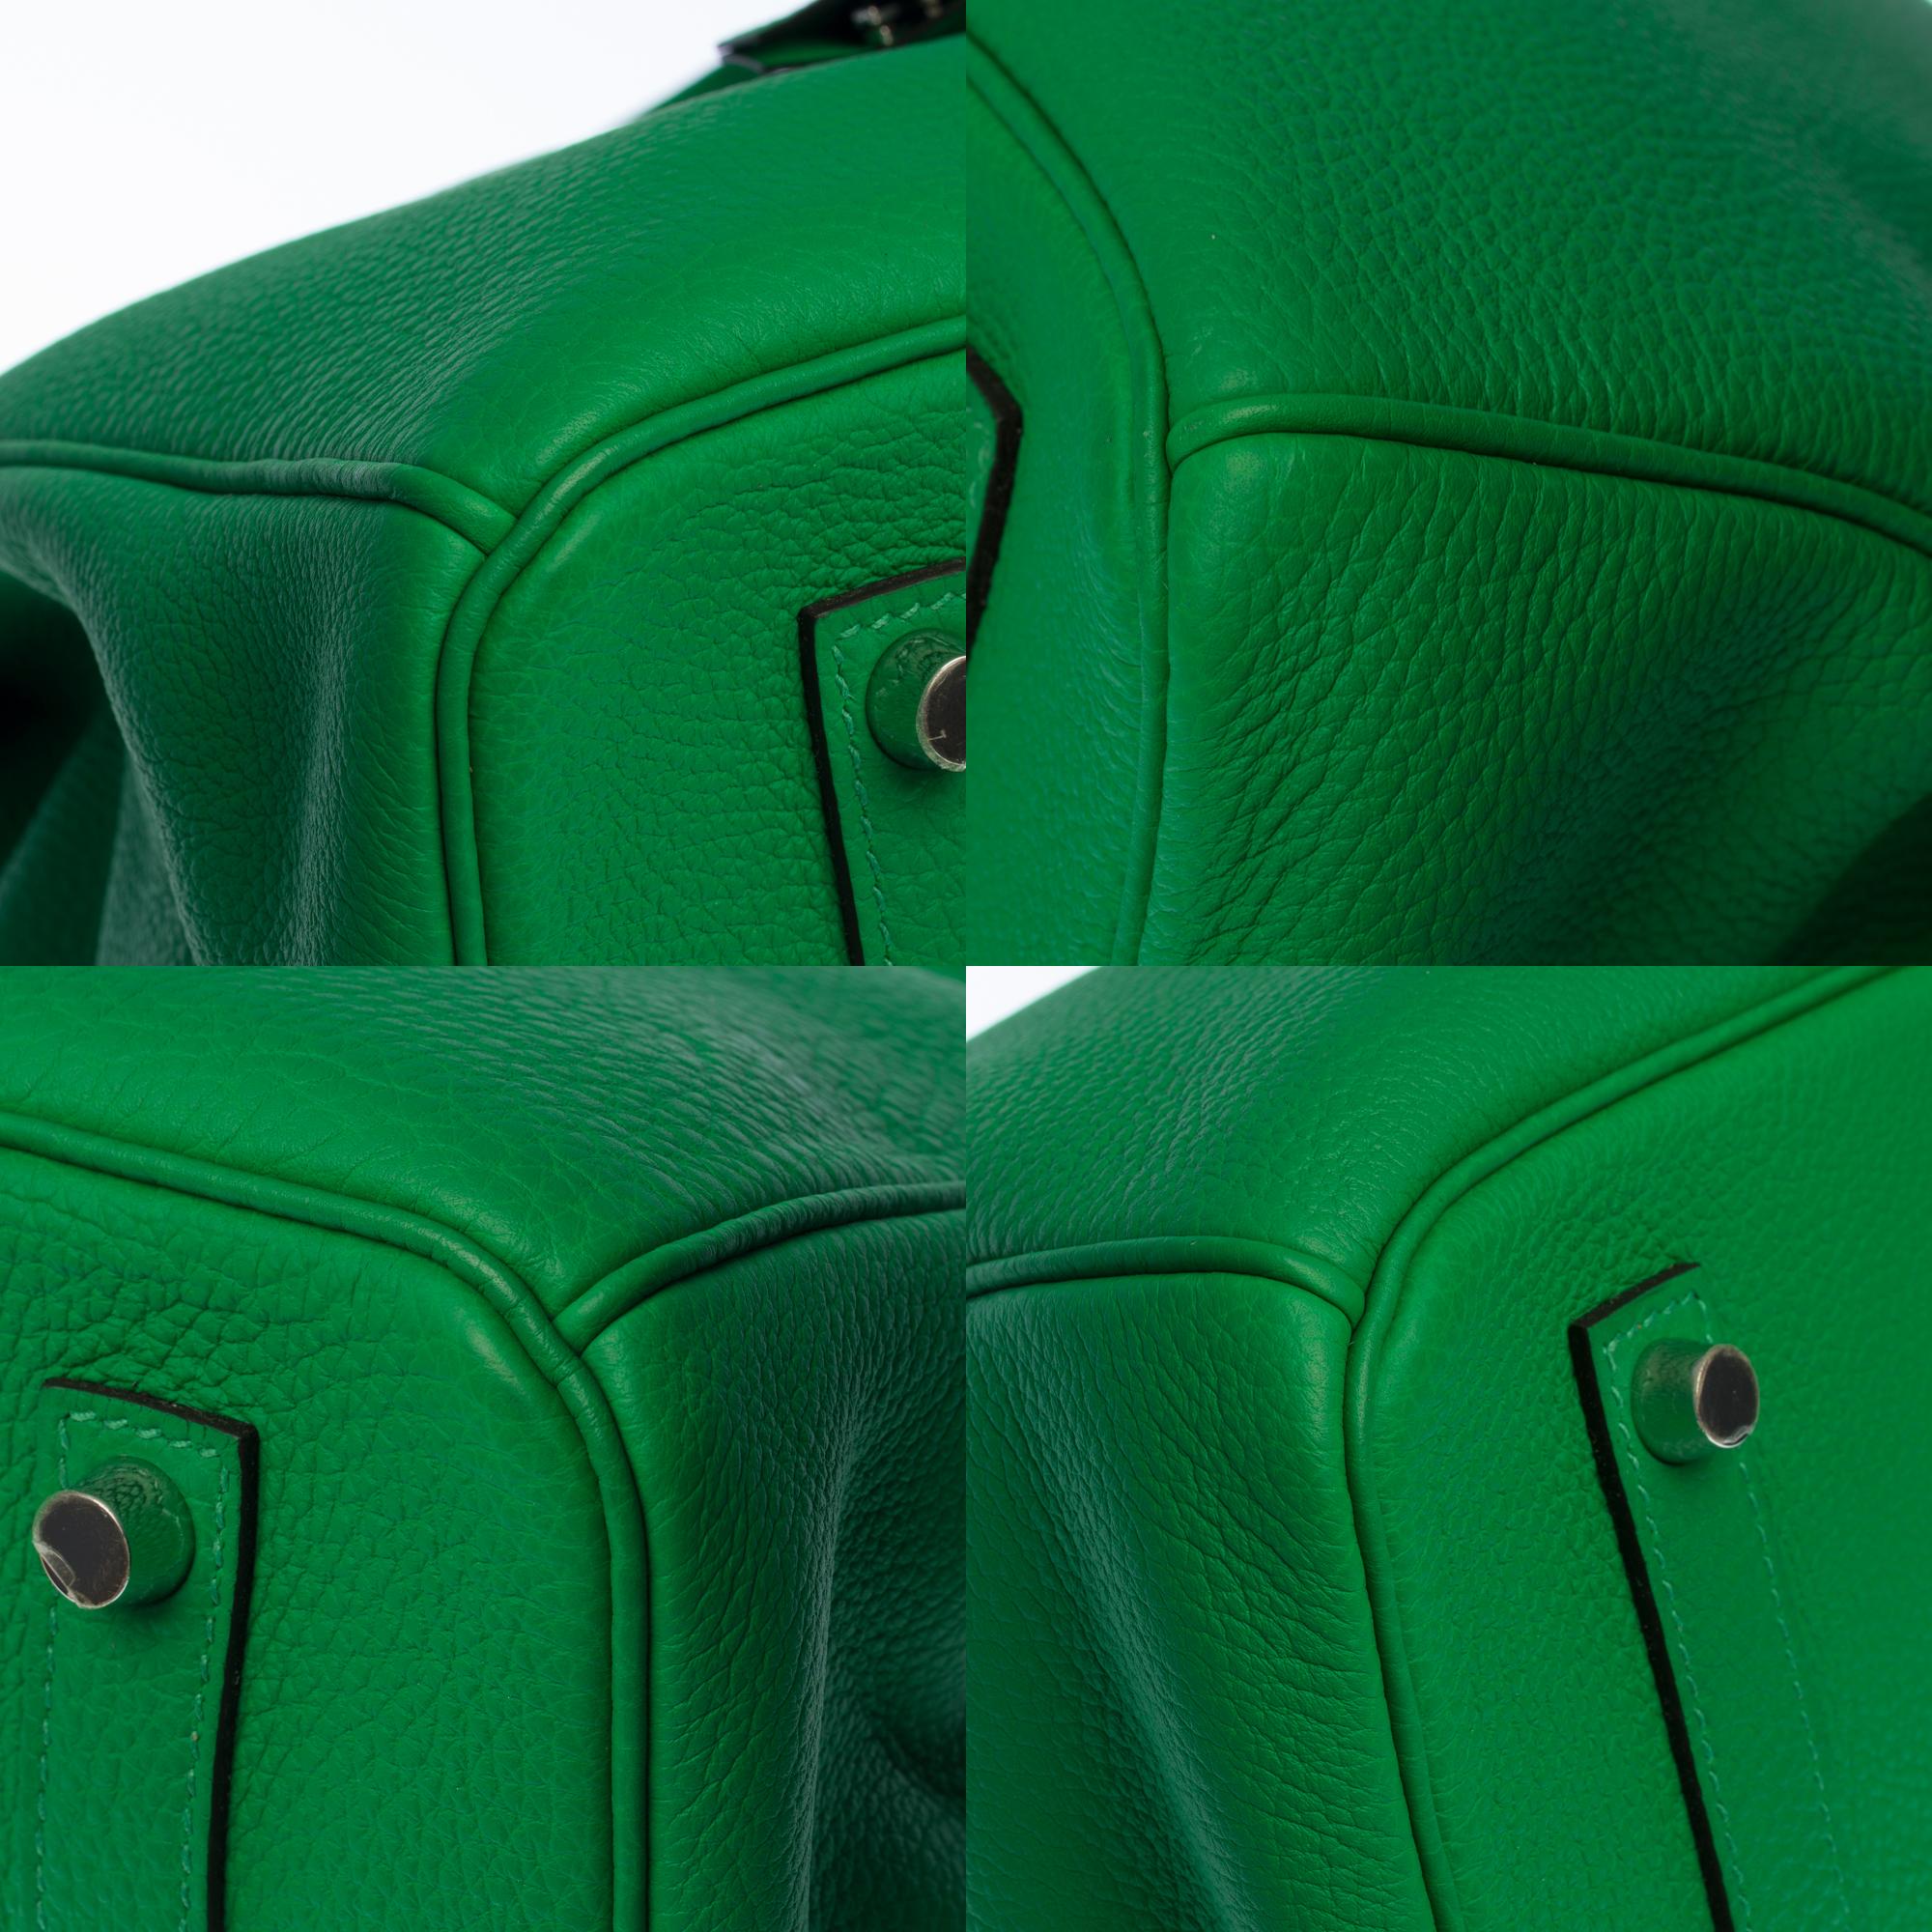 New Condition Hermès Birkin 35 handbag in Vert Bamboo Togo leather, SHW 5